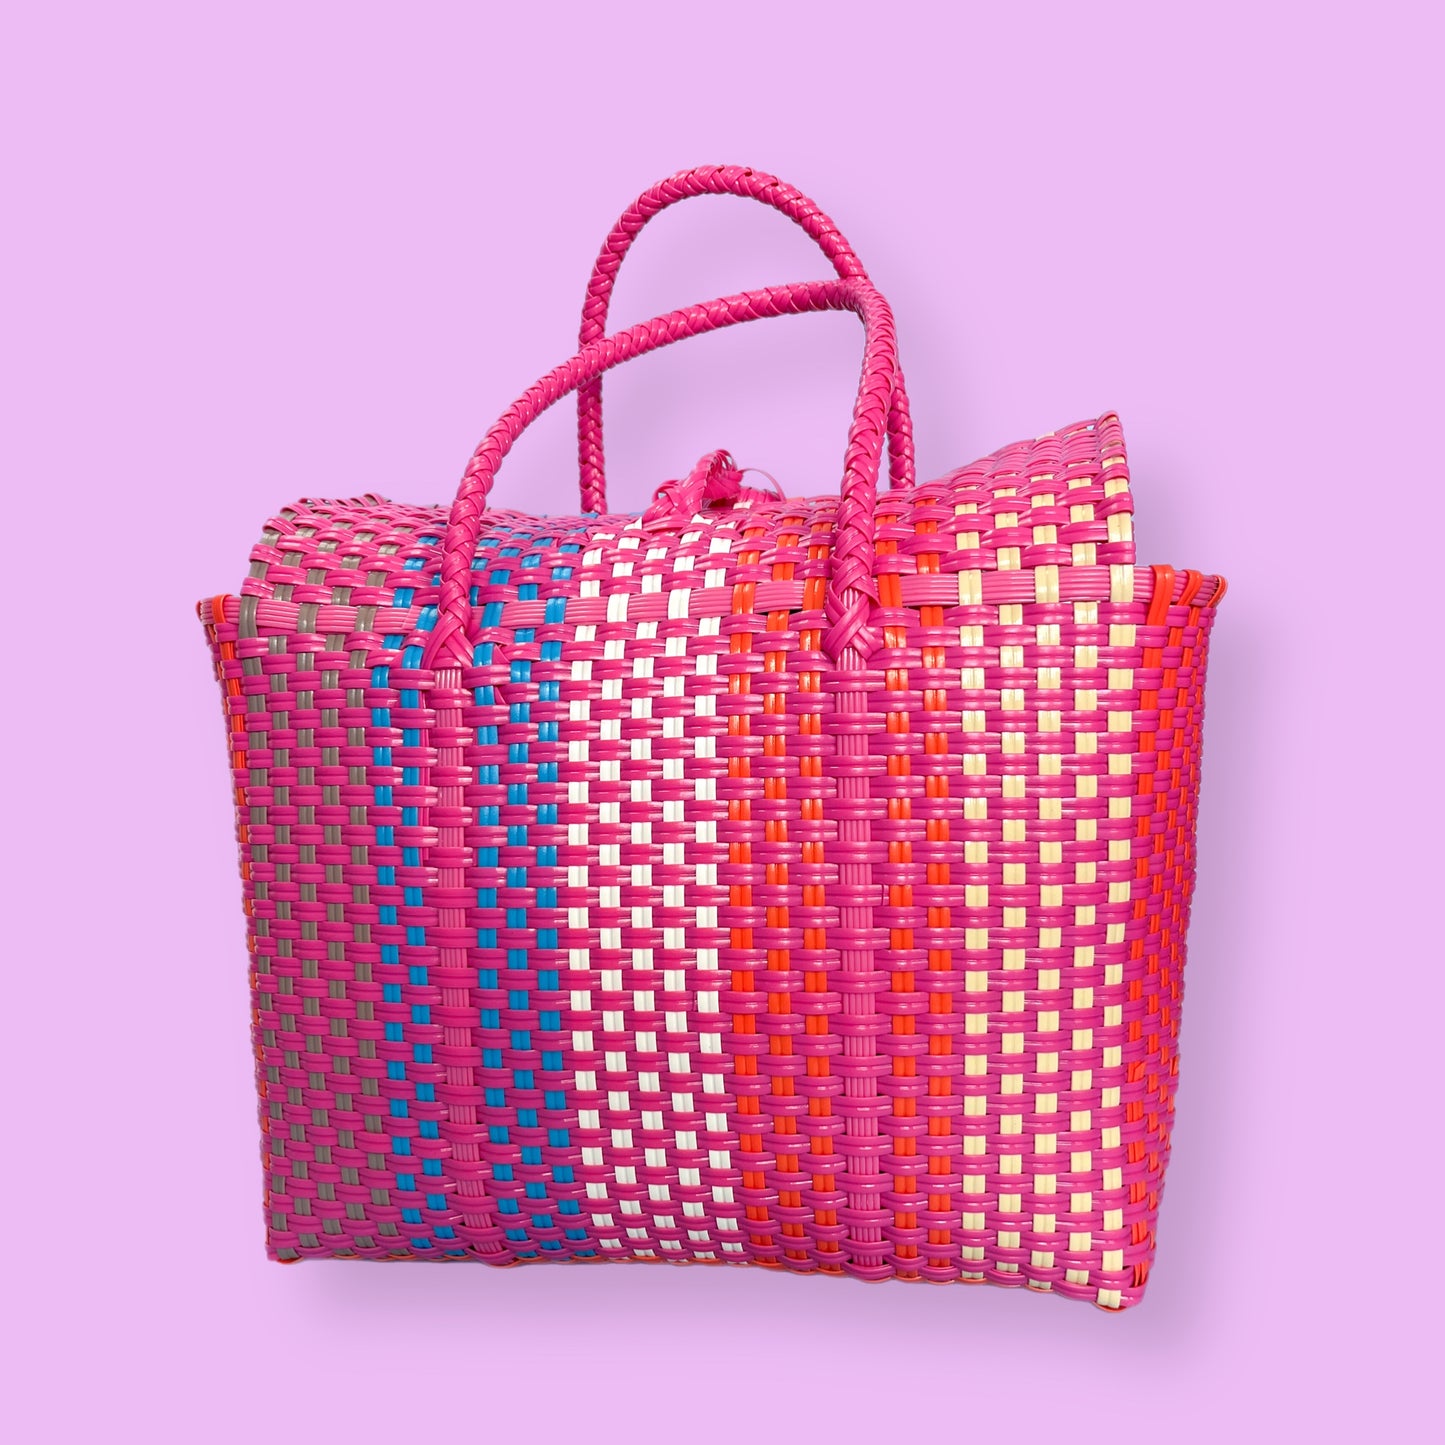 Goodordering woven basket pannier bag bike bag red and pink